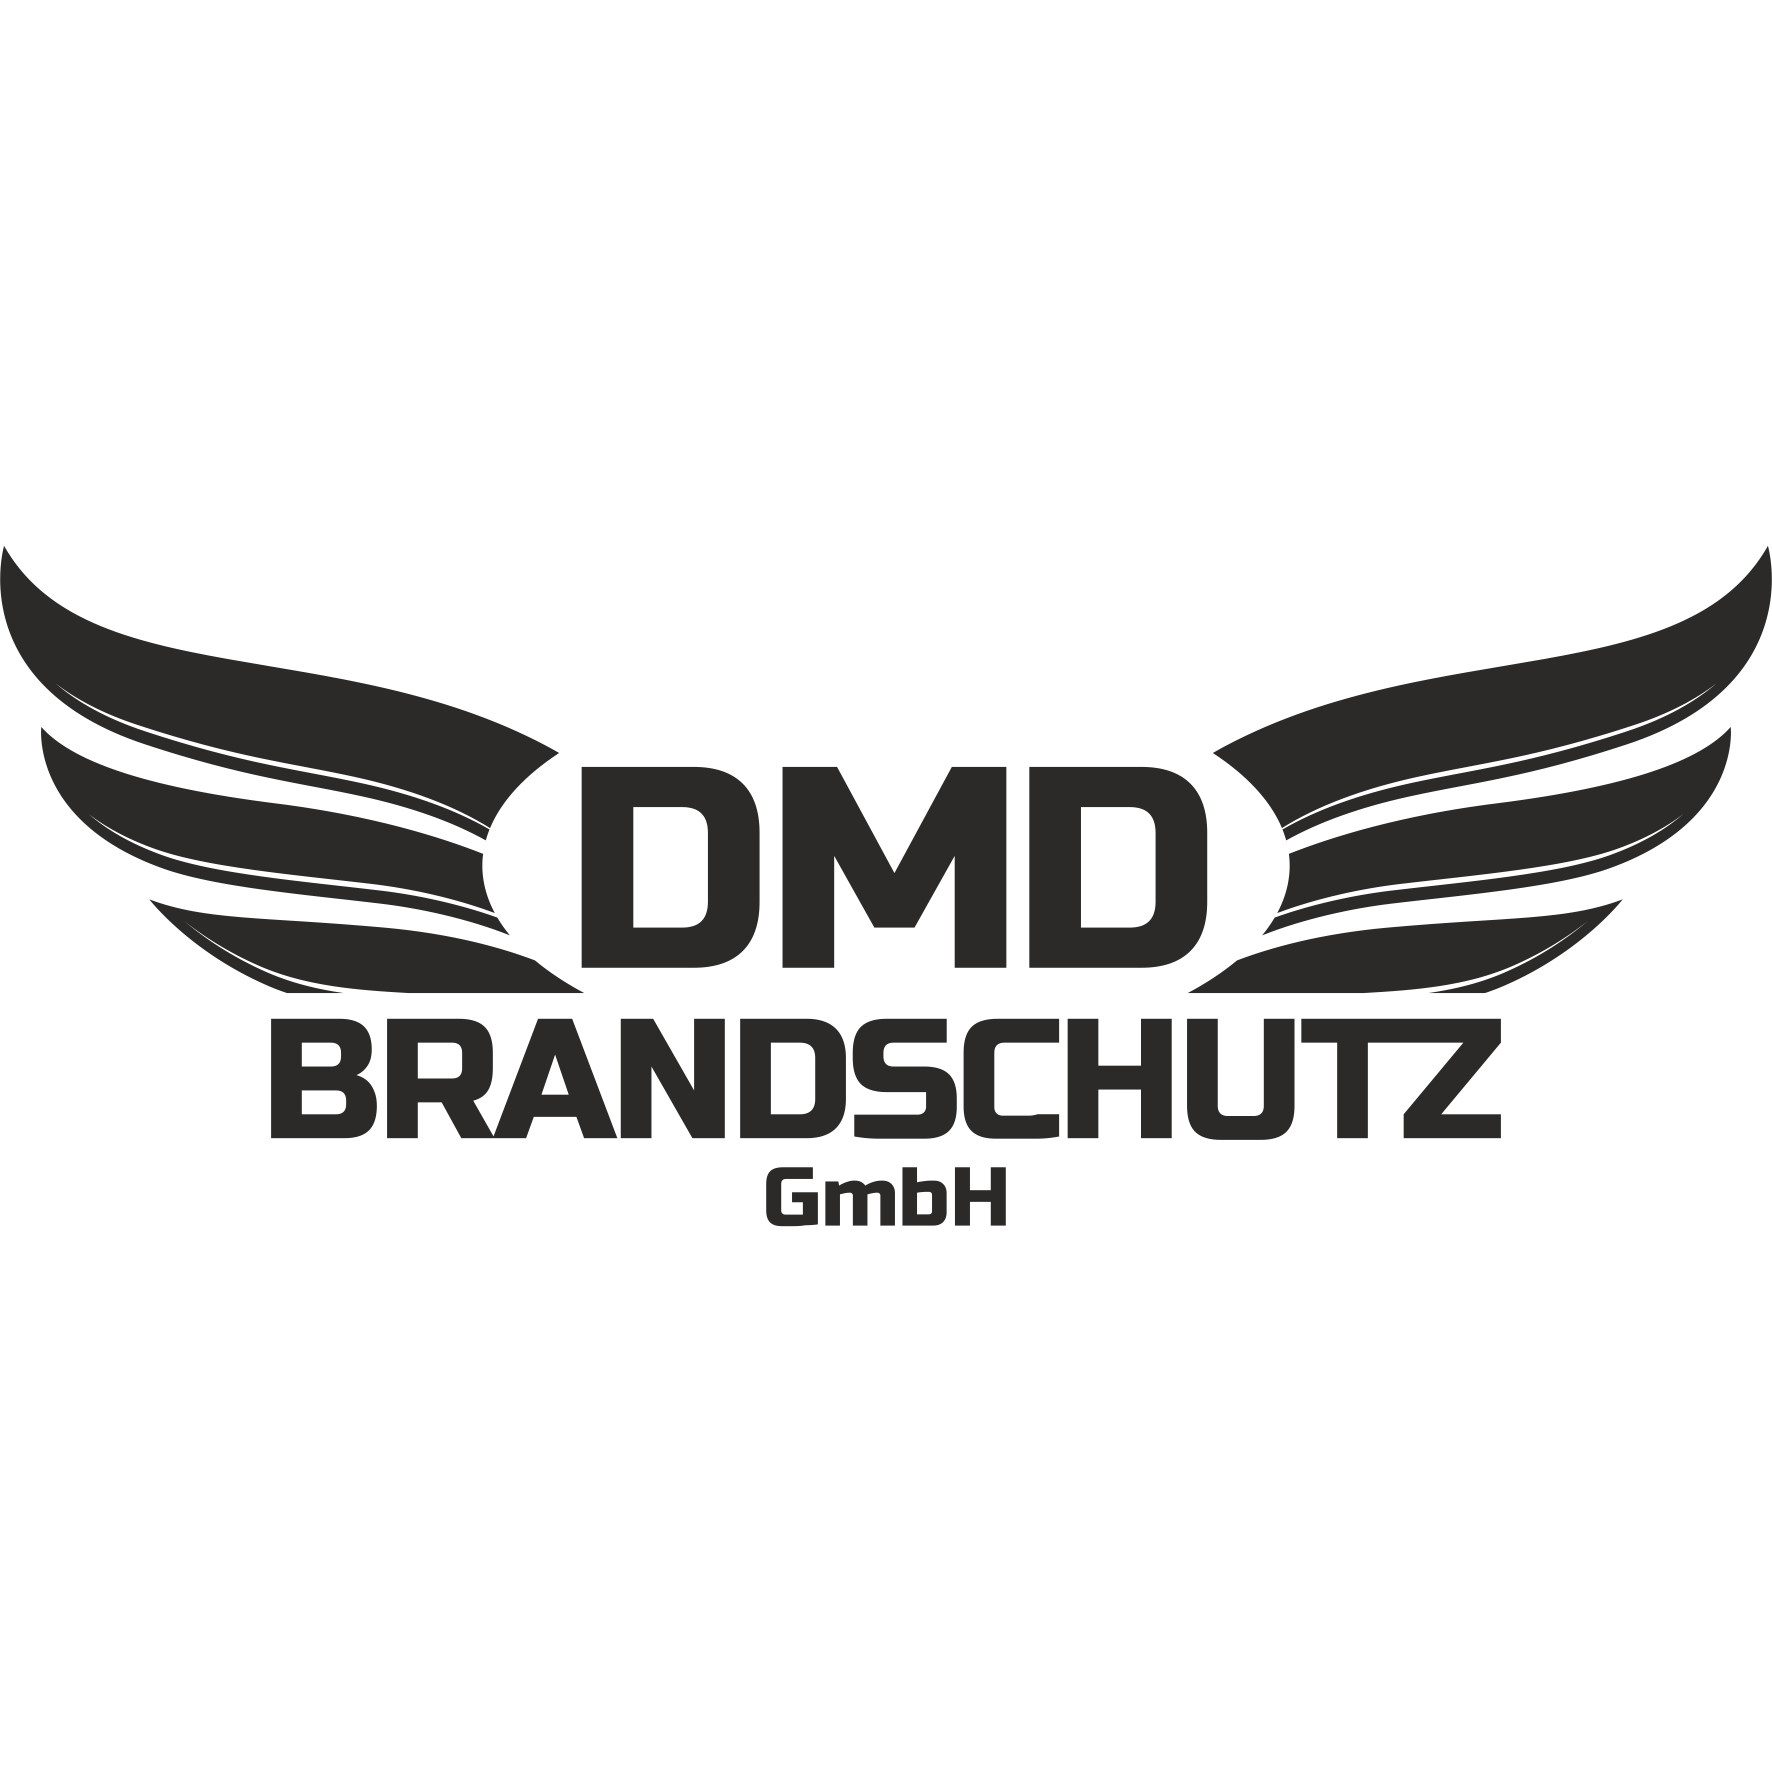 DMD-Brandschutz GmbH Duisburg 0203 31775288